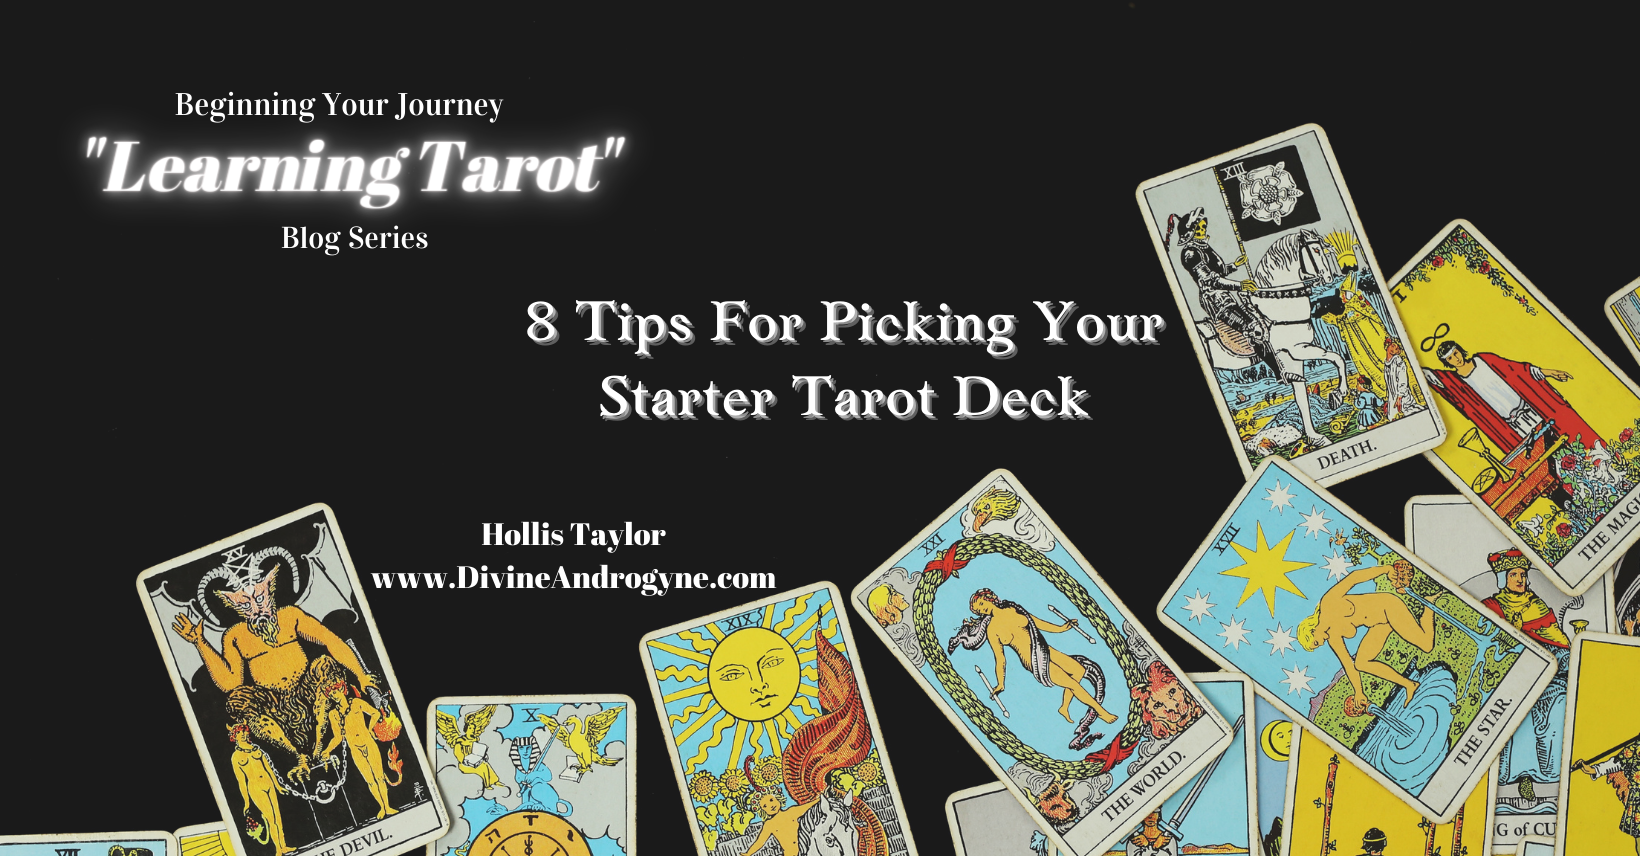 Learning Tarot